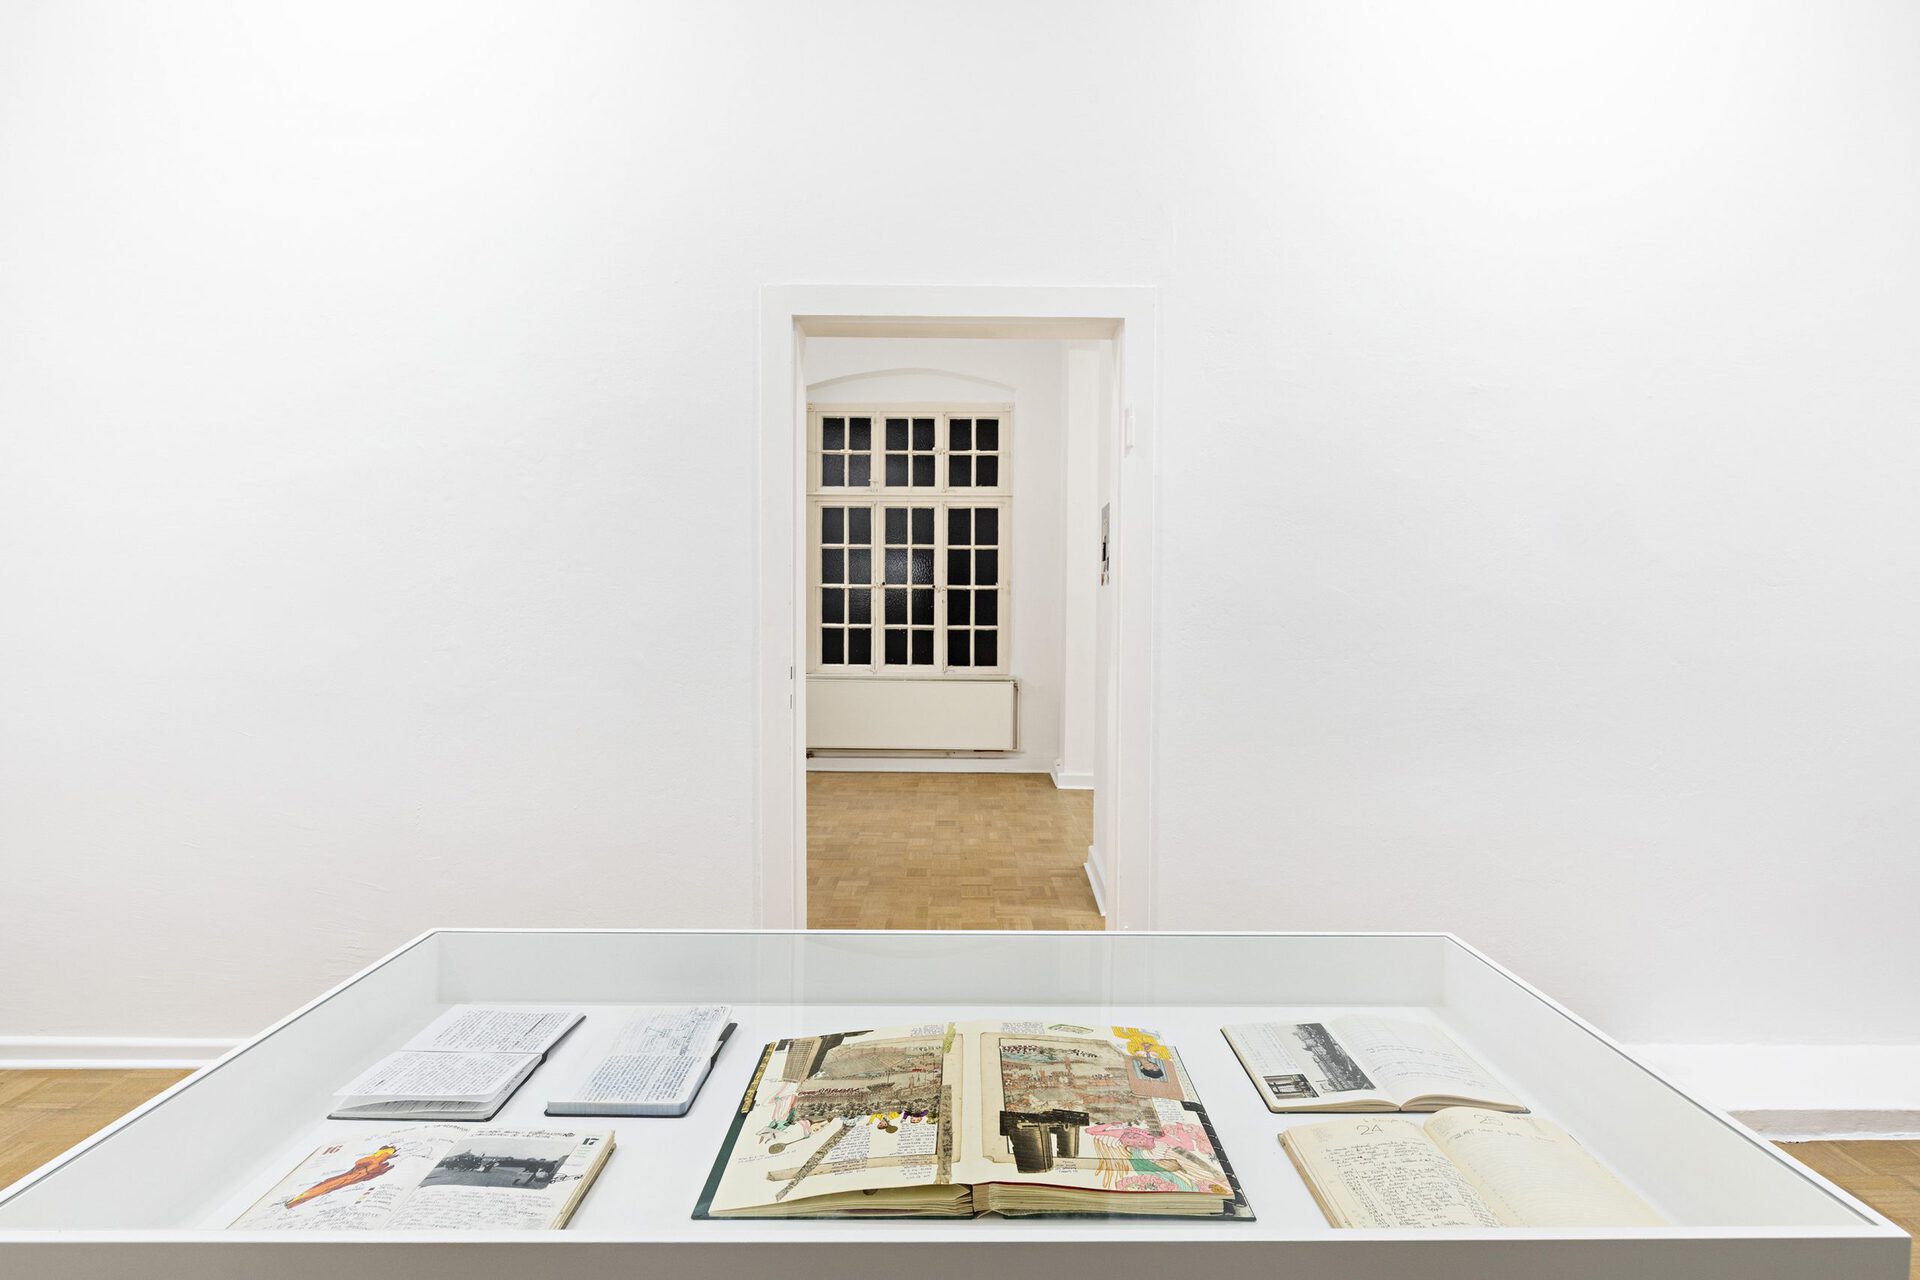 Bady Dalloul, Ordonator, 2019; Badland, 1999 – 2004; exhibition view THE EQUALITY OF POSSIBILITY, Kunstverein Bielefeld, 2021. Photo: Fred Dott